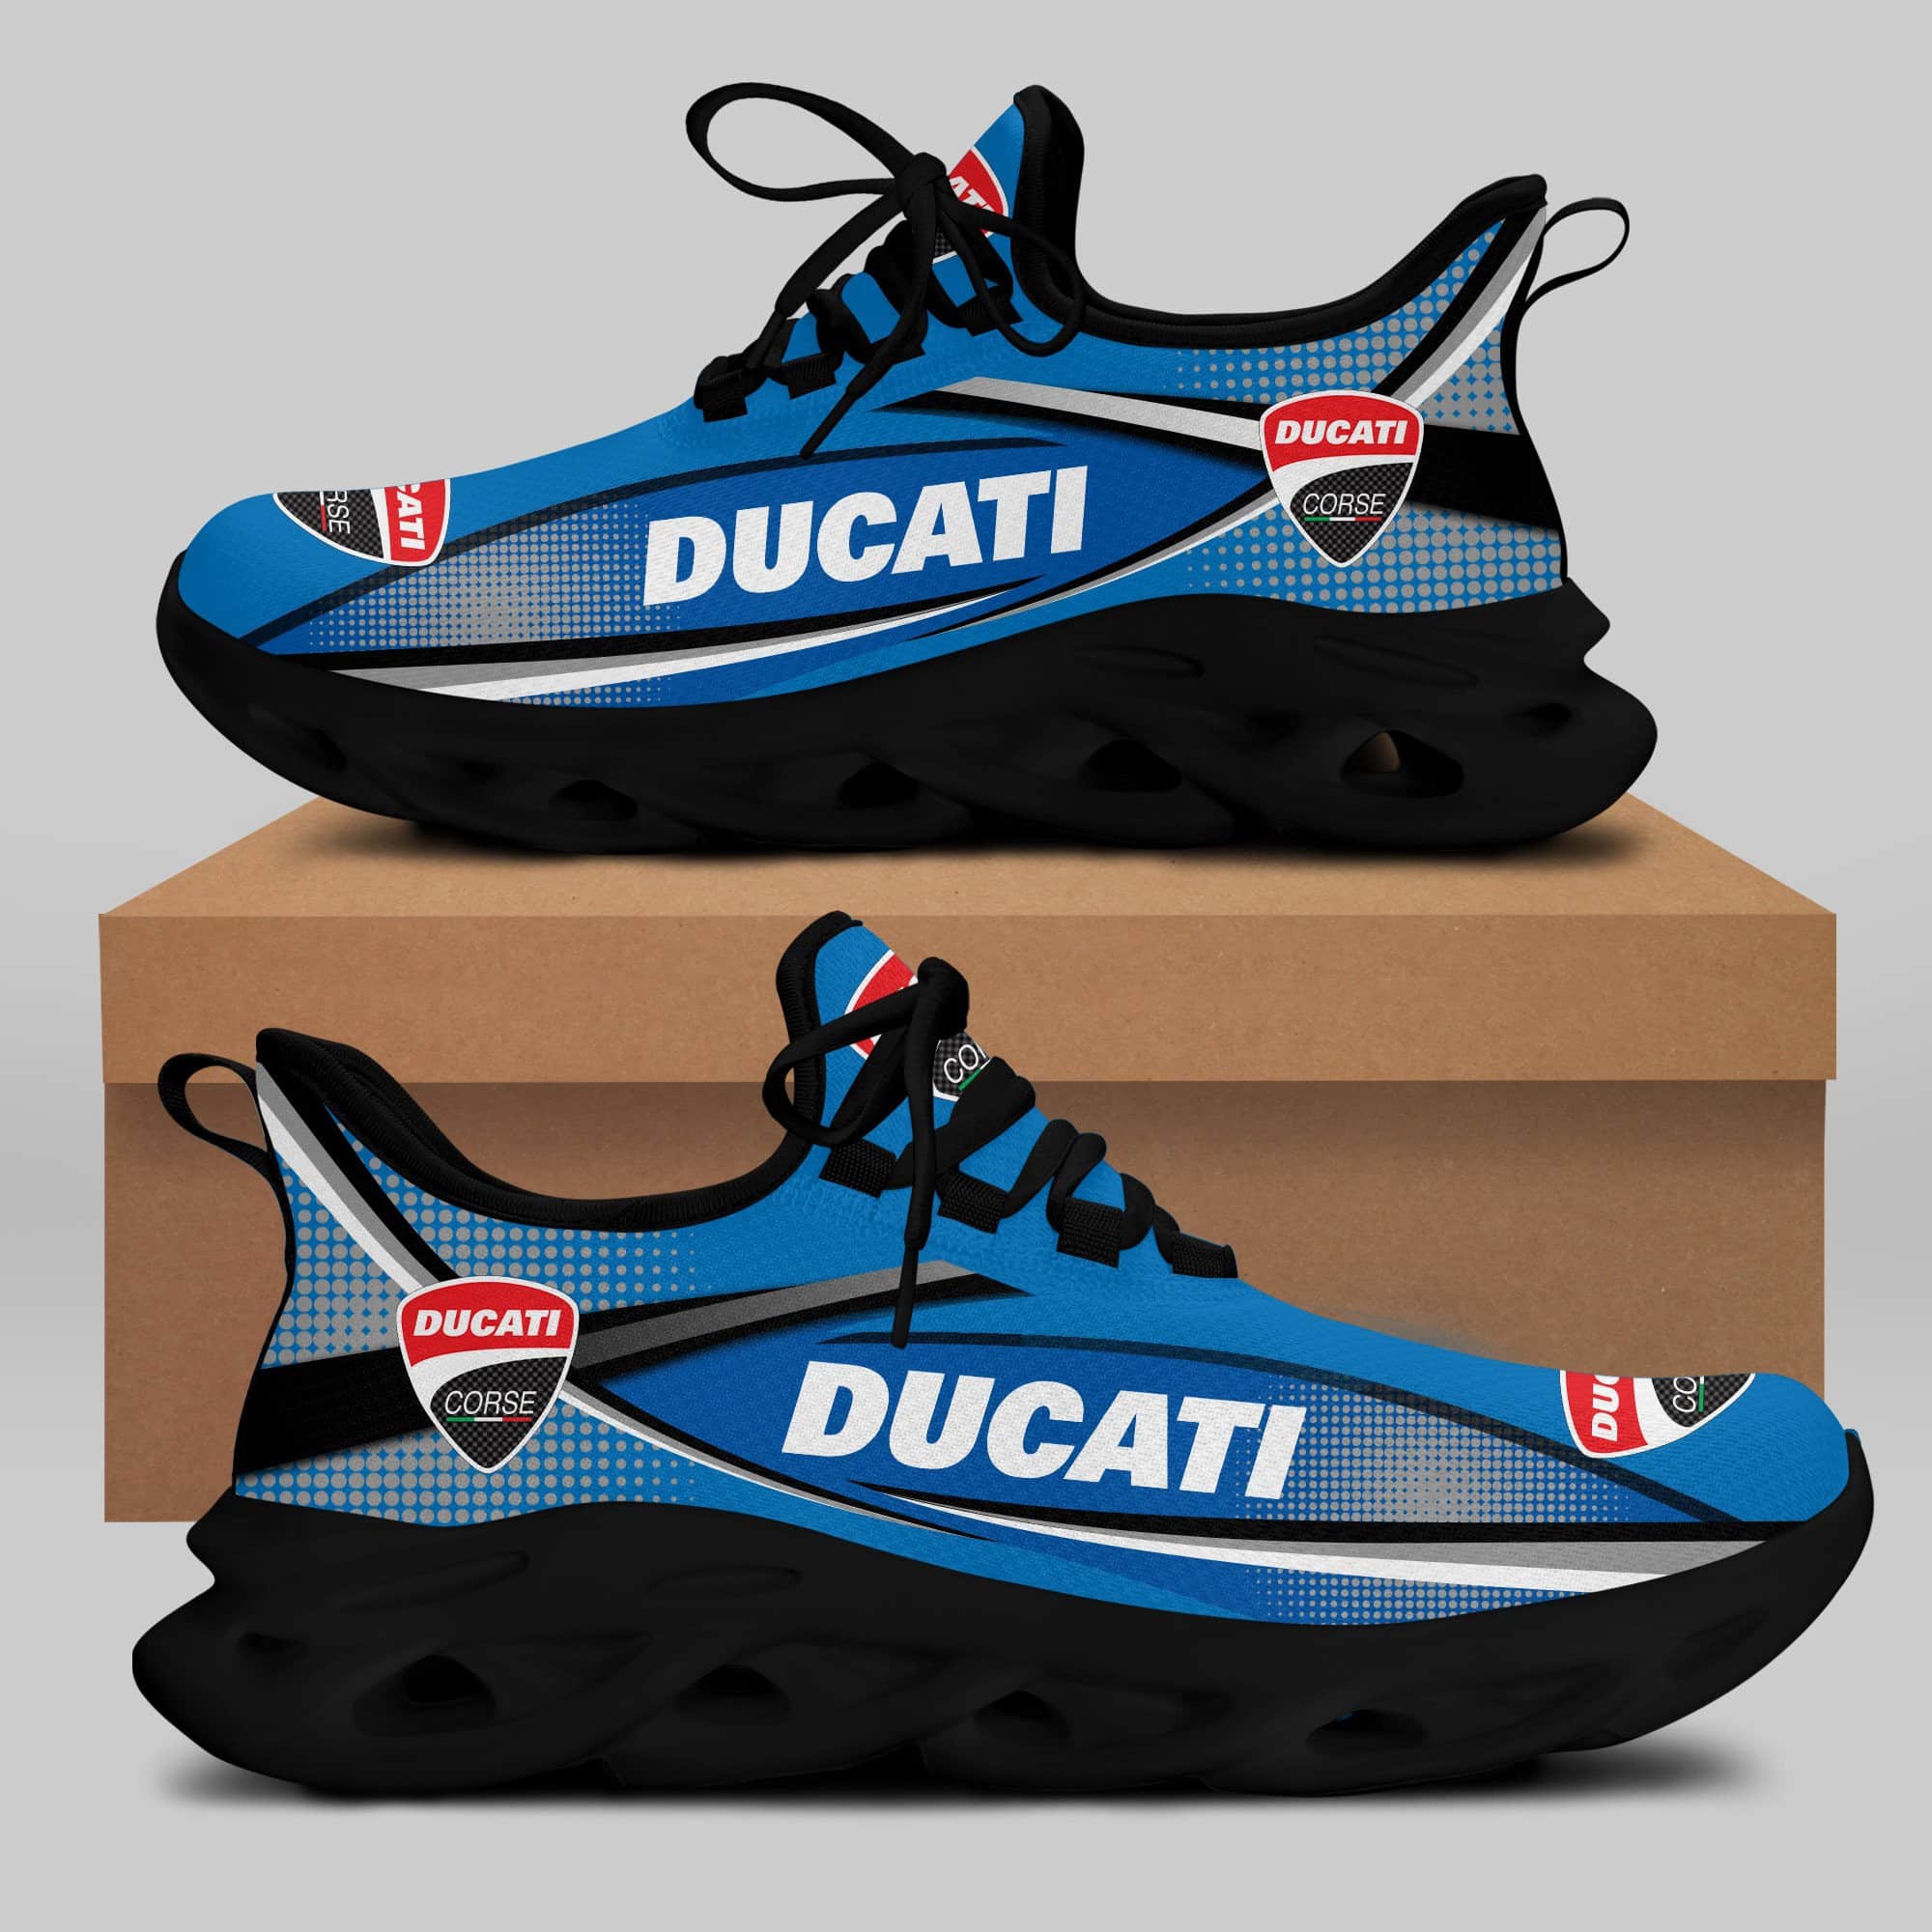 Ducati Racing Running Shoes Max Soul Shoes Sneakers Ver 48 1